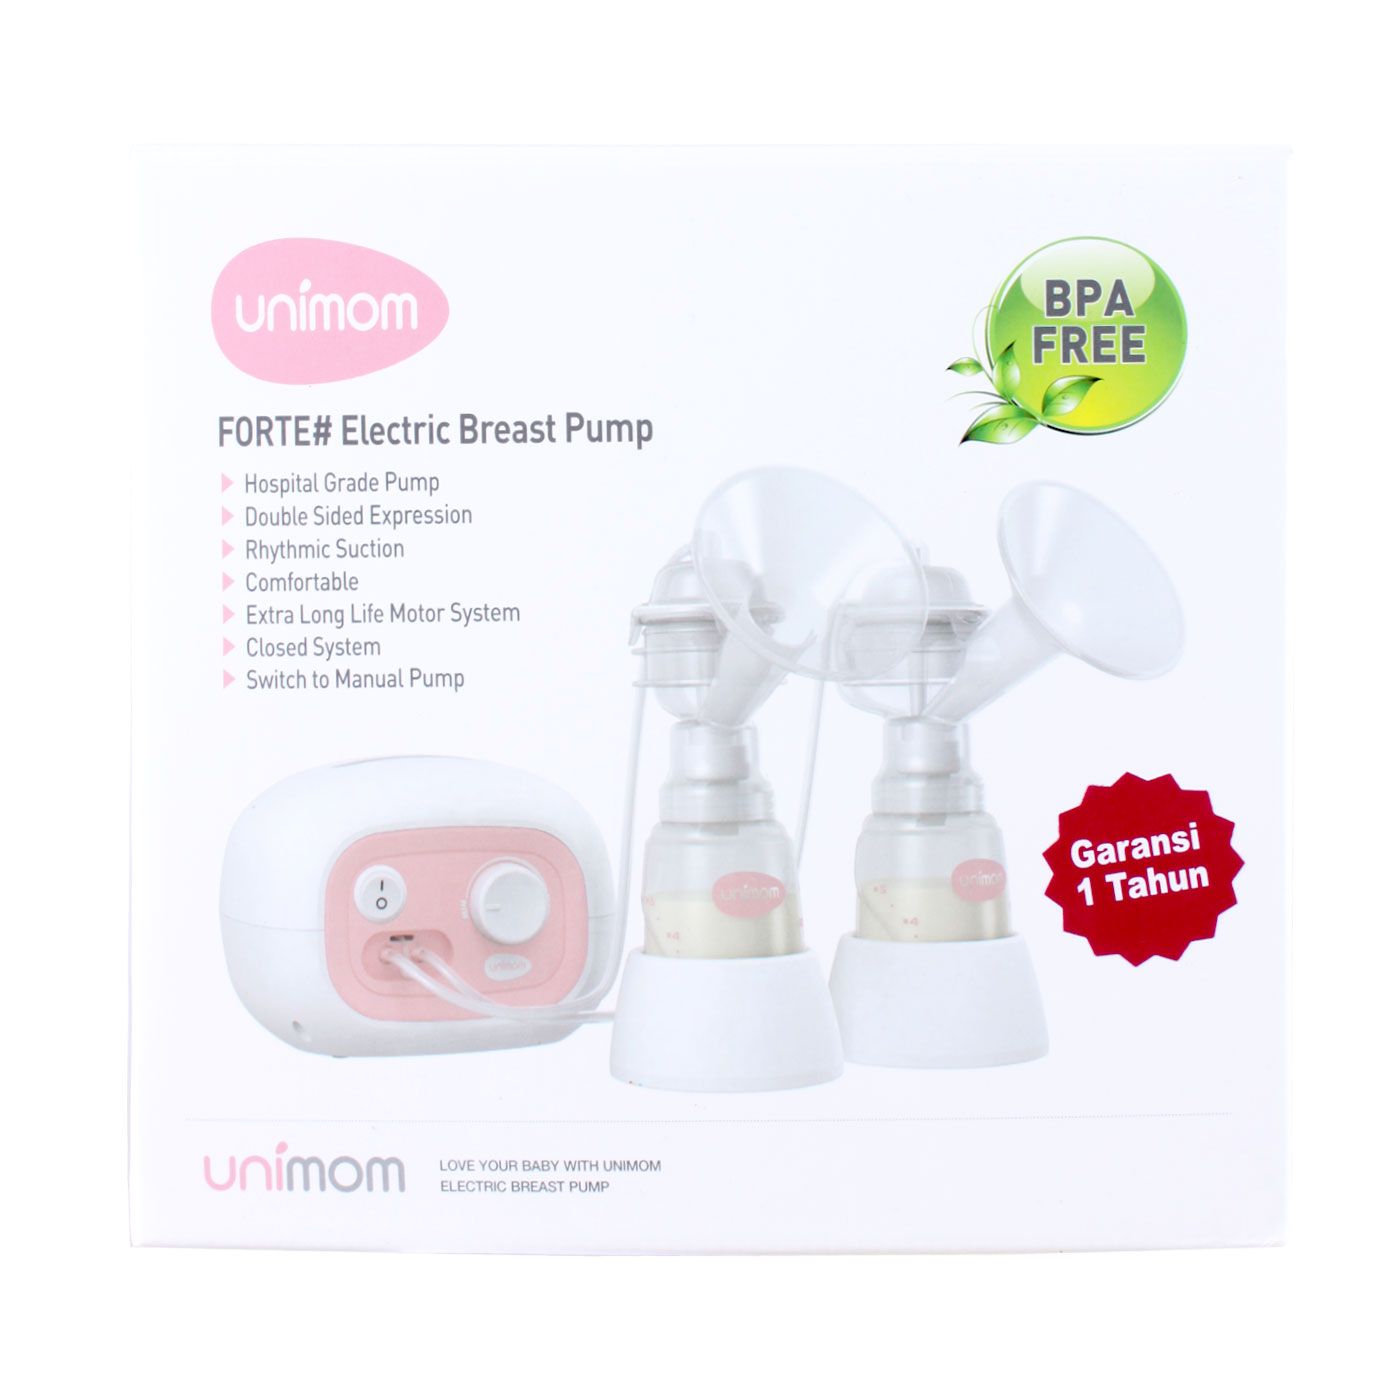 Unimom Forte Breast Pump - 1